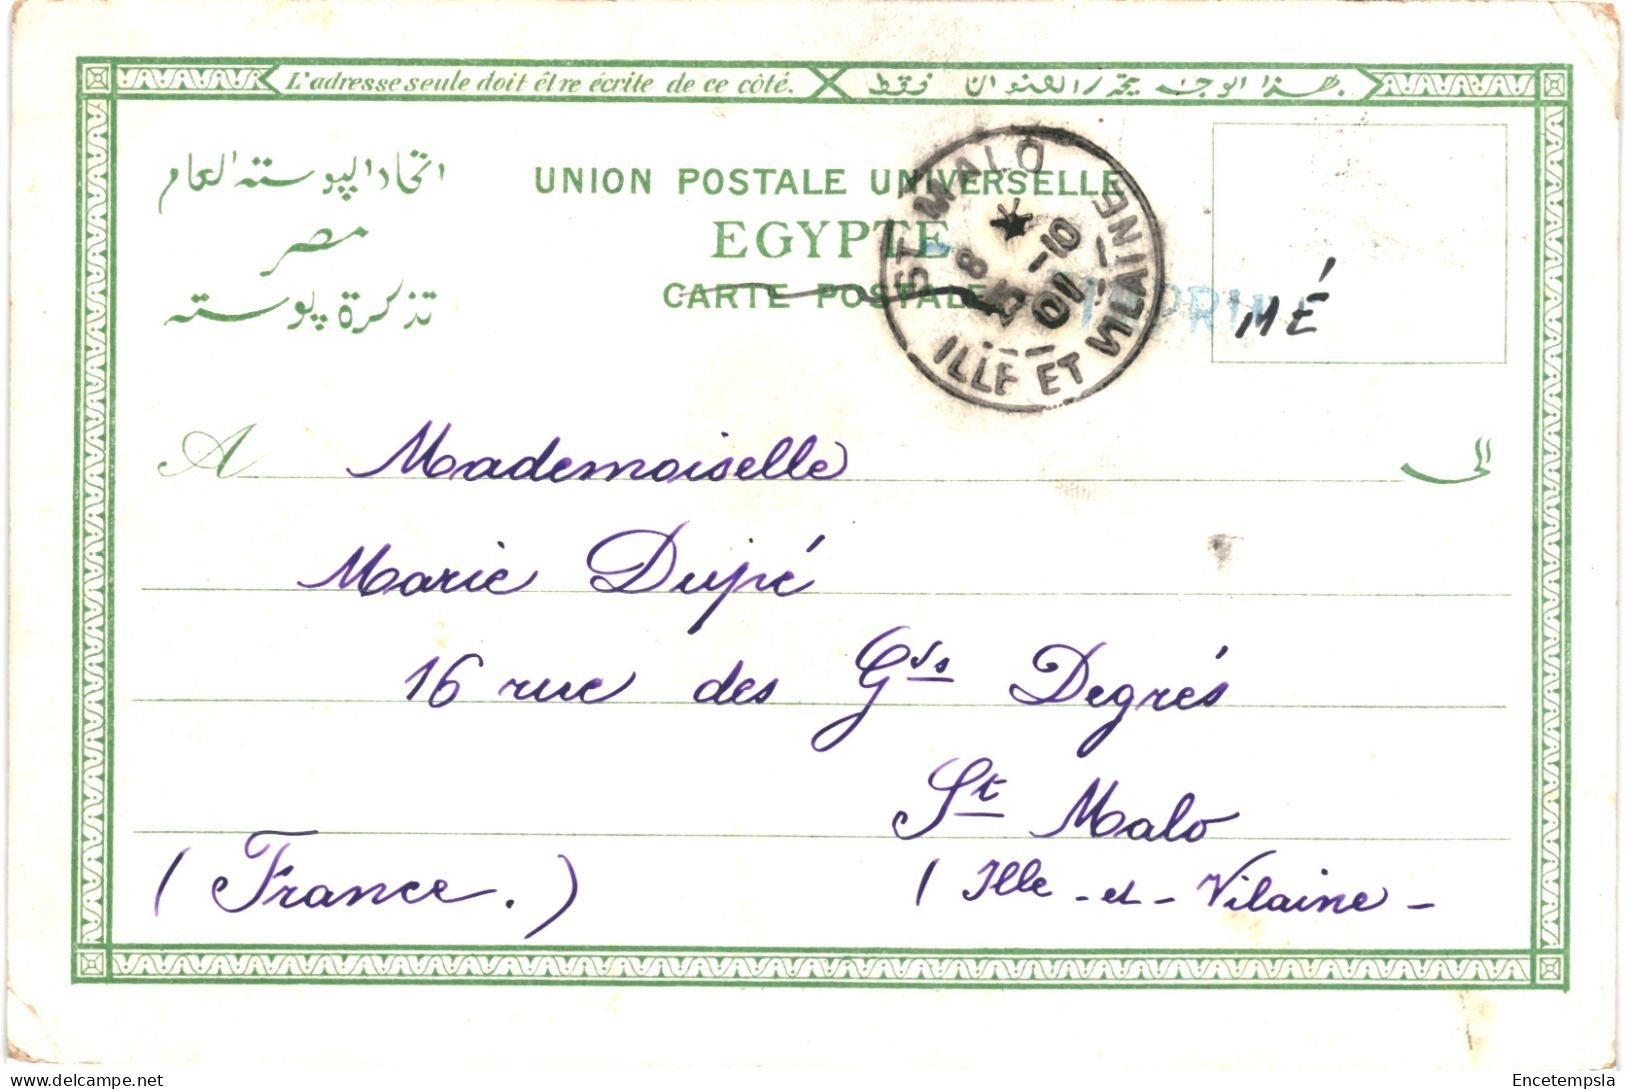 CPA Carte Postale Egypte Alexandrie Panorama Avec Colonne Pompée 1901  VM79001 - Alexandrië